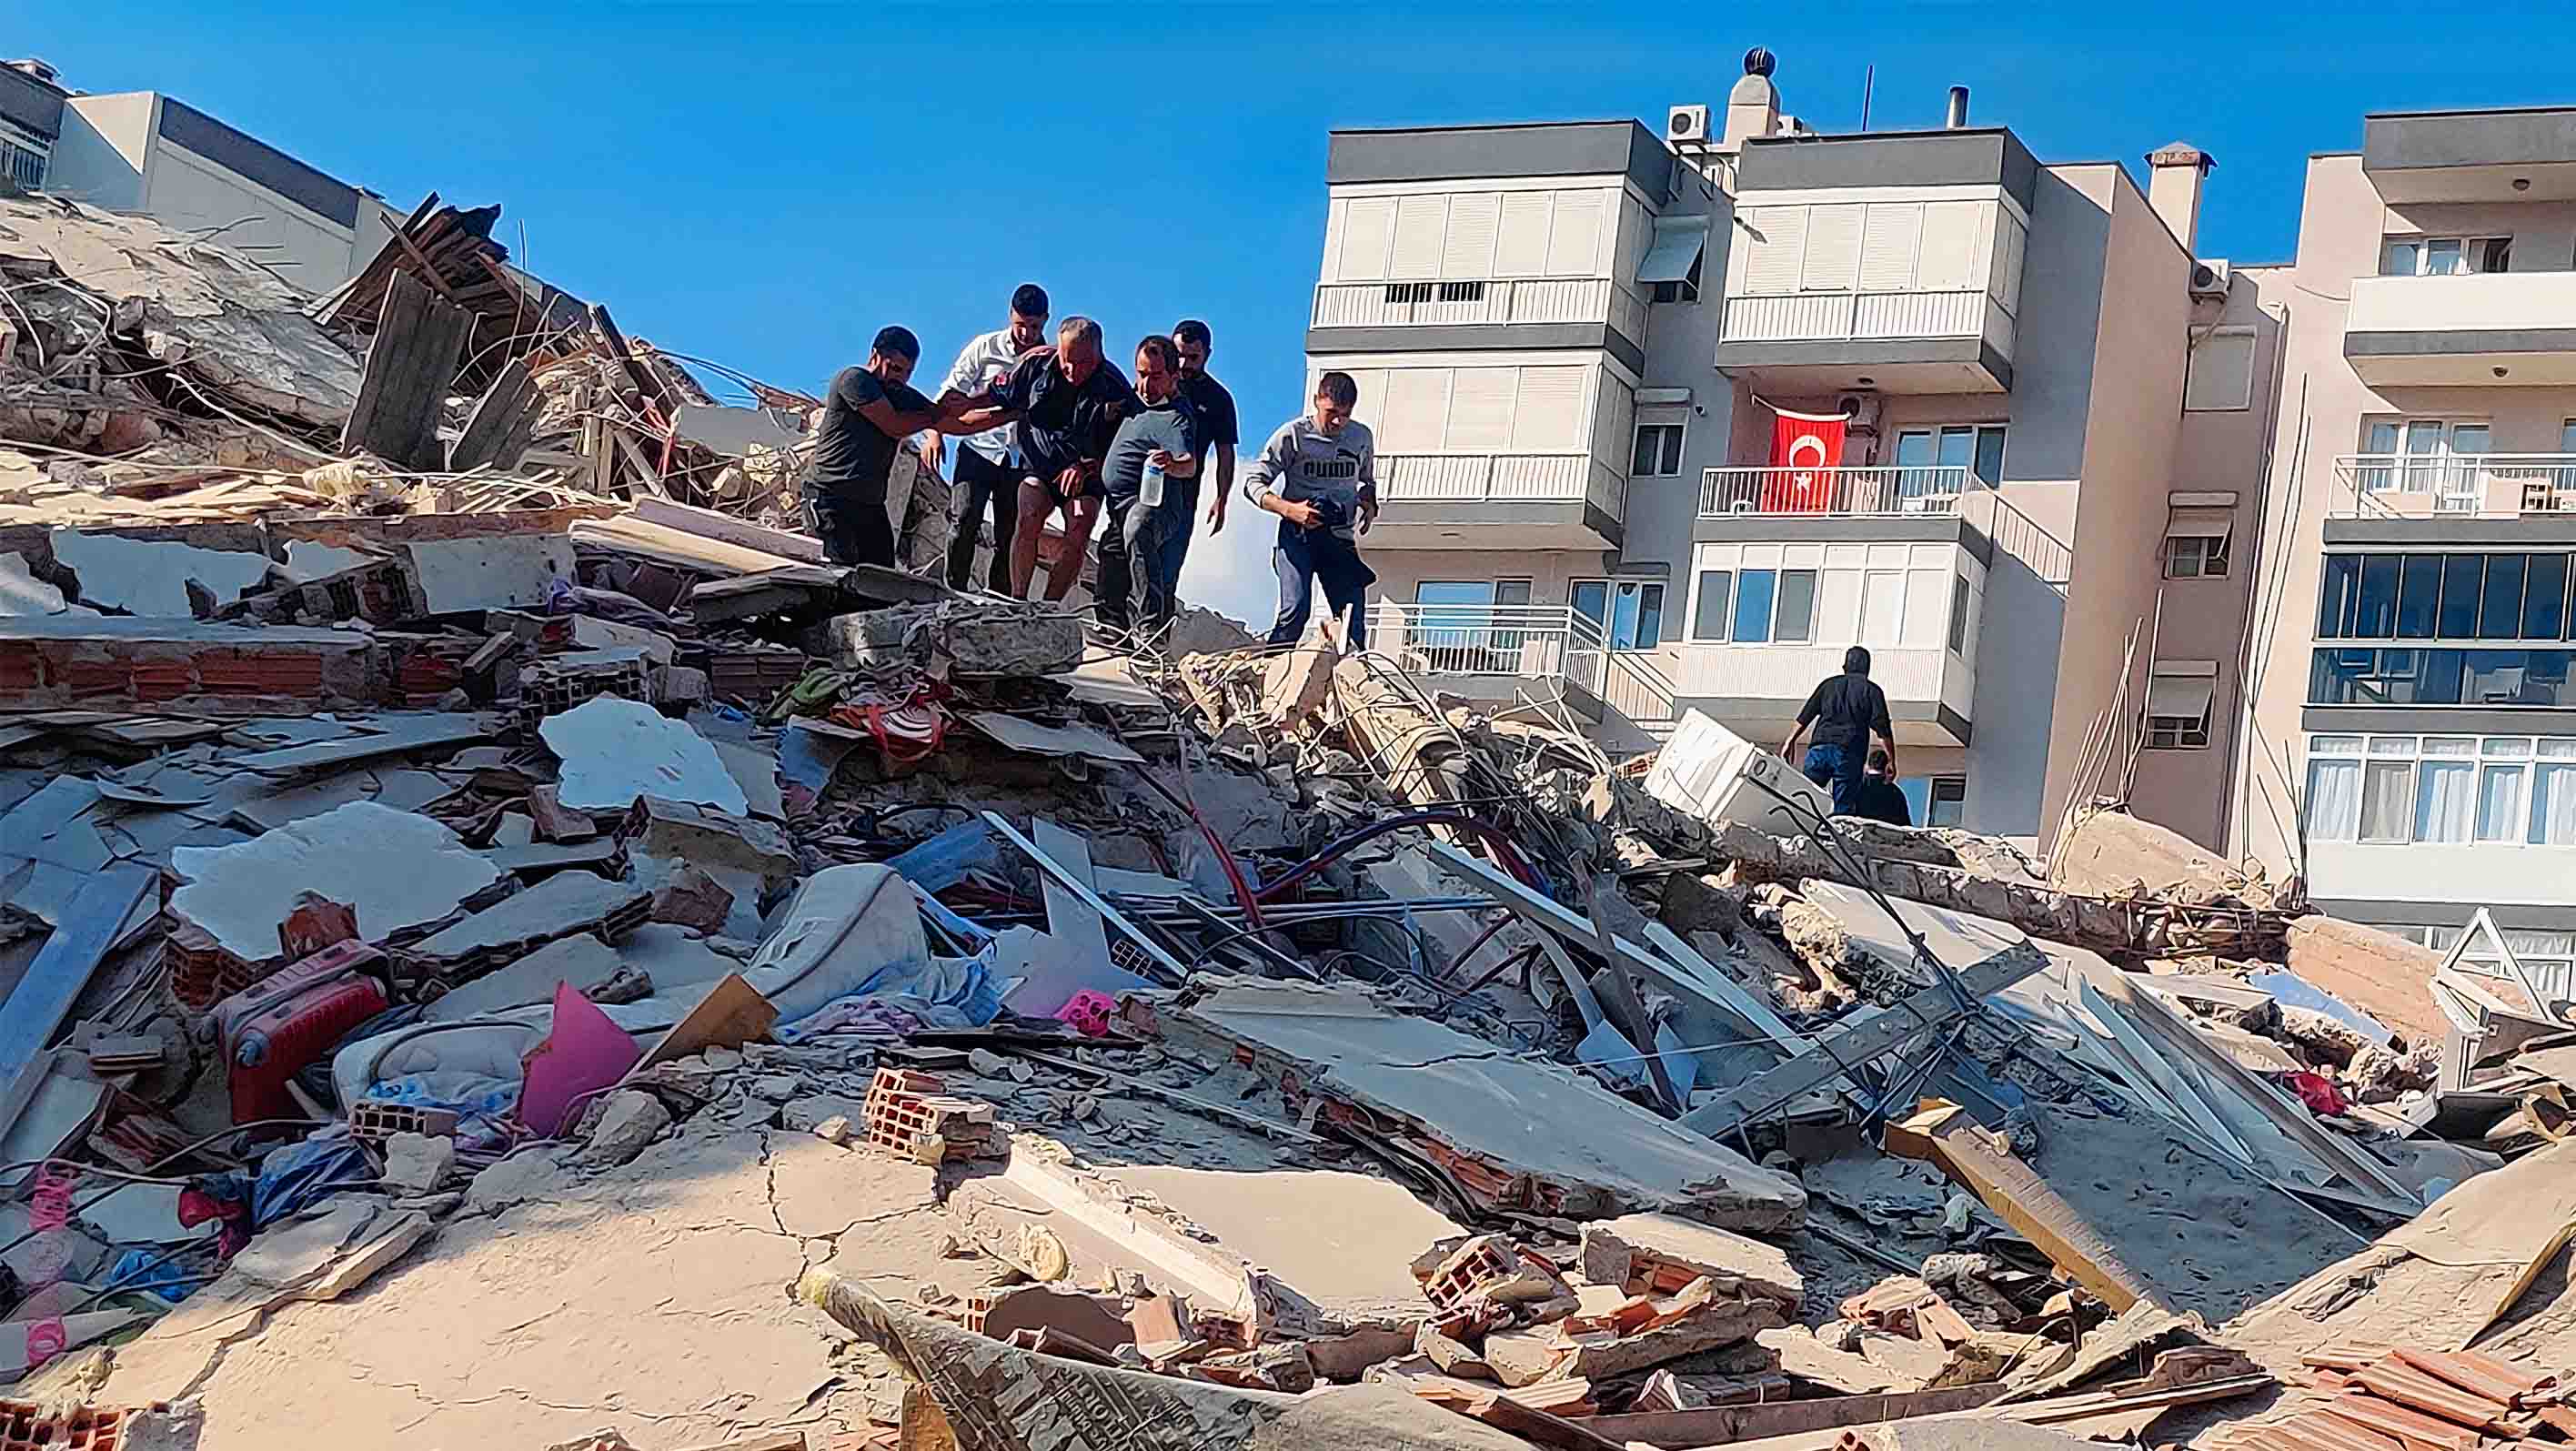 Tawakkol Karman pledges funding for 50 housing units for earthquake victims in Turkey